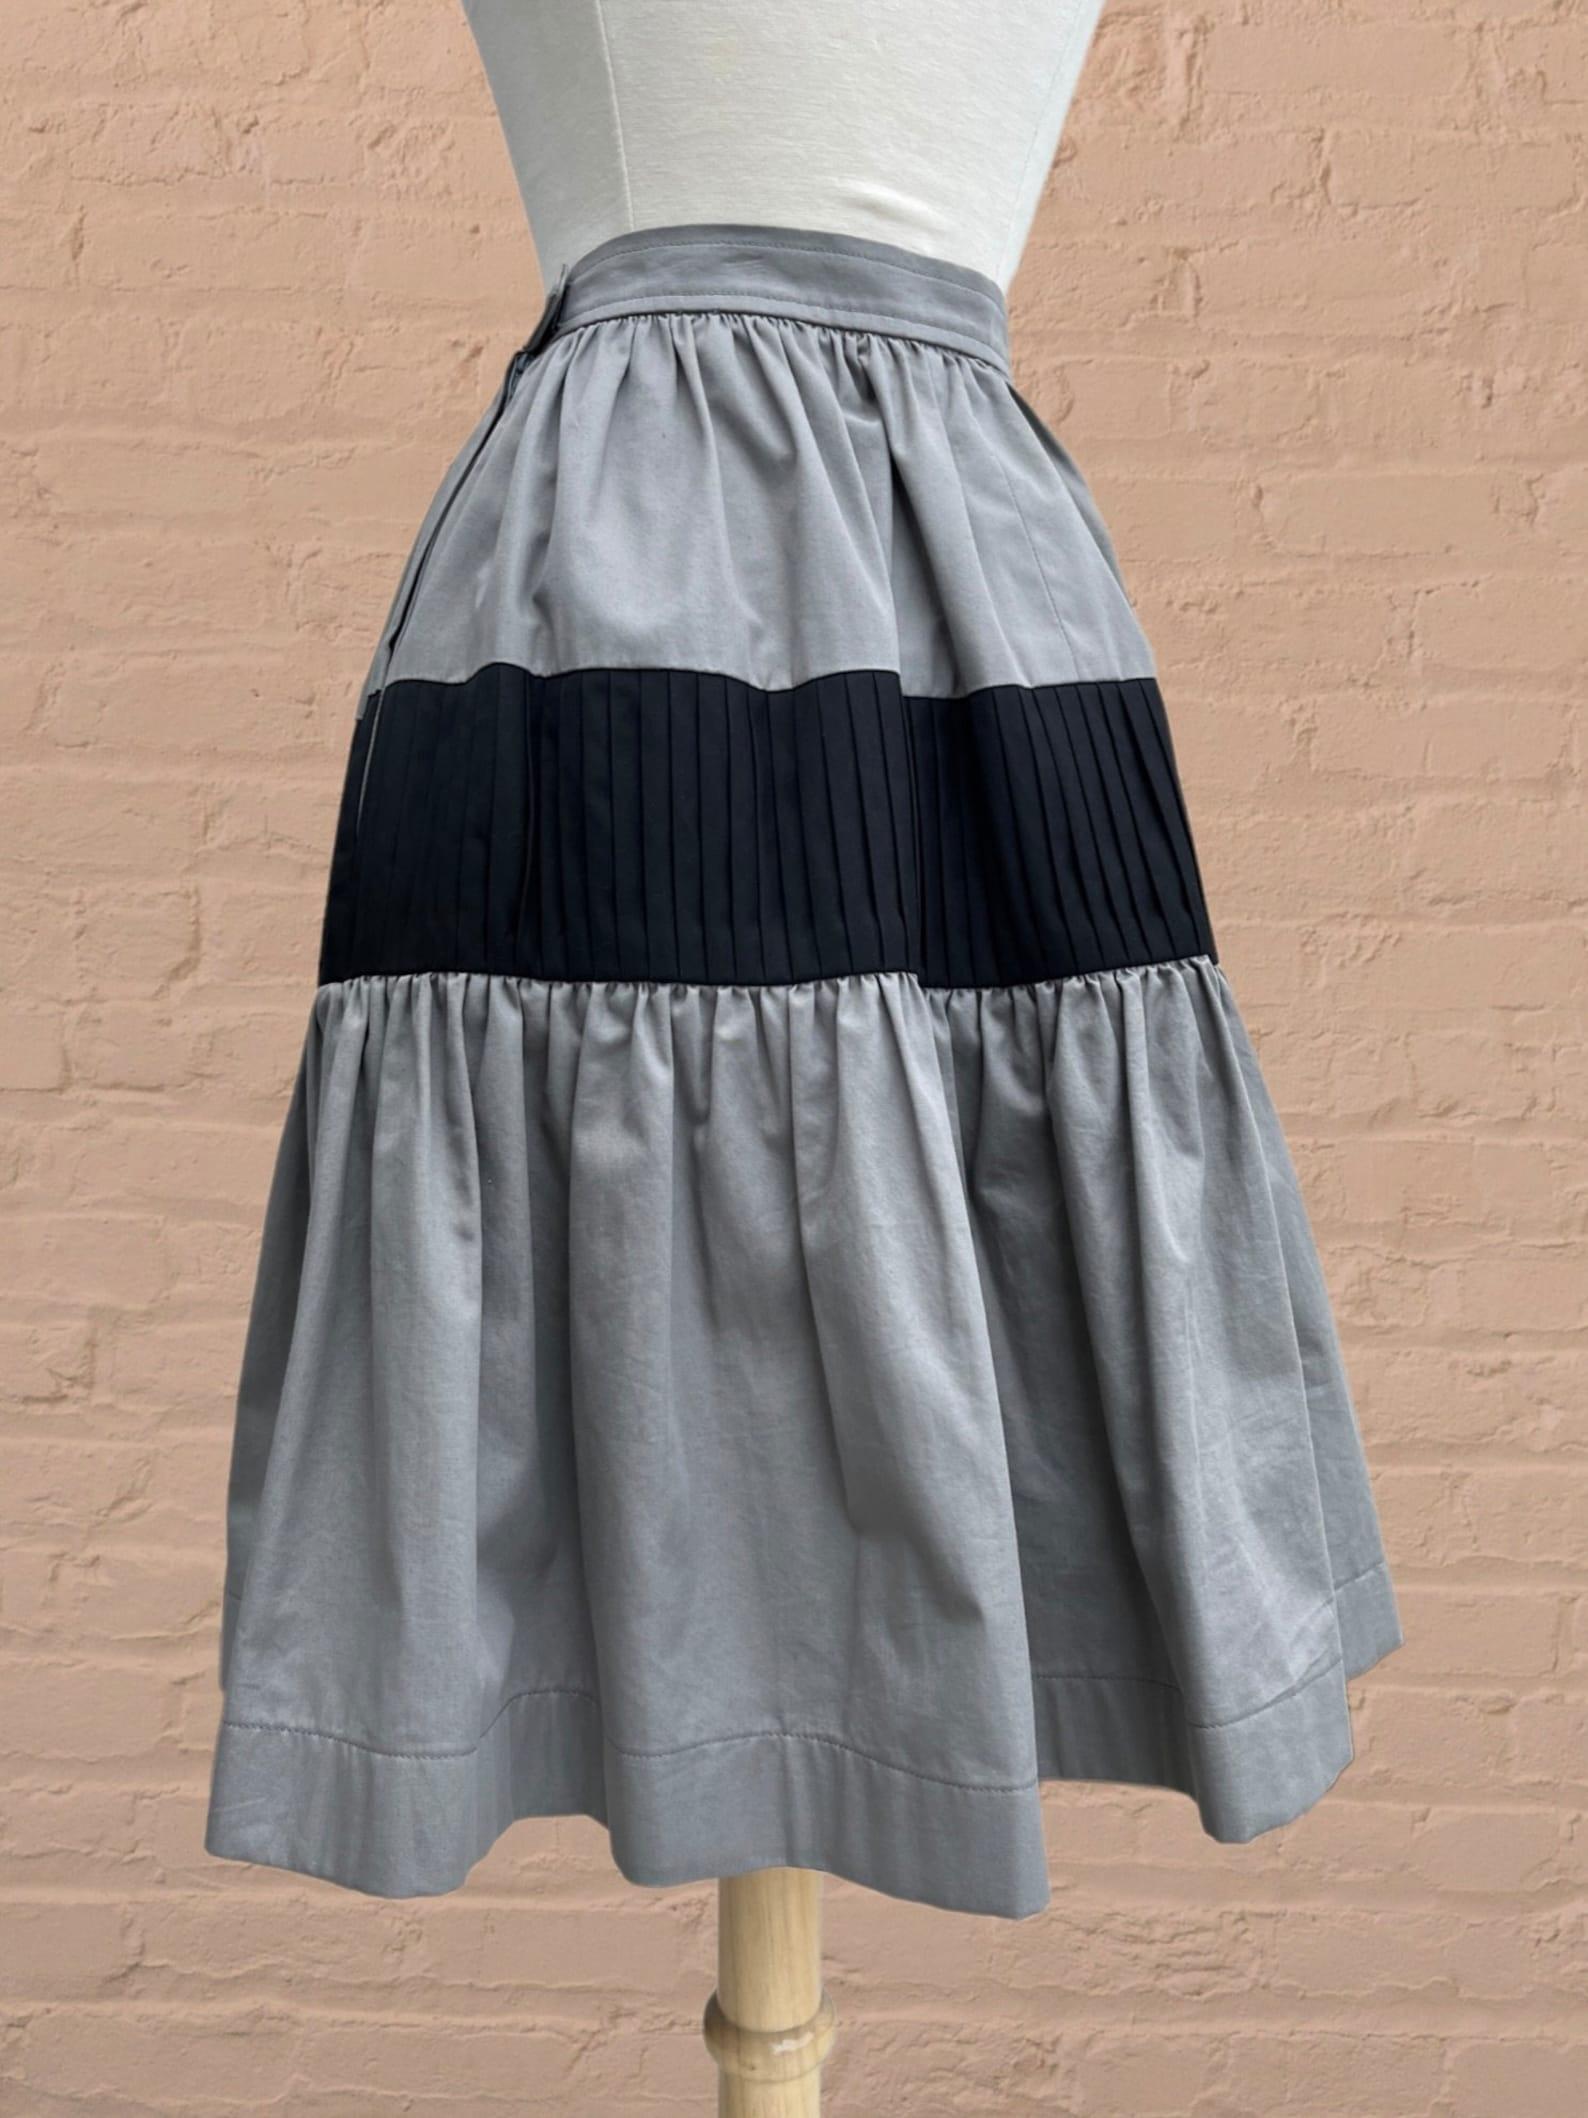 Yves Saint Laurent Colorblock Skirt, Circa 1980s For Sale 2